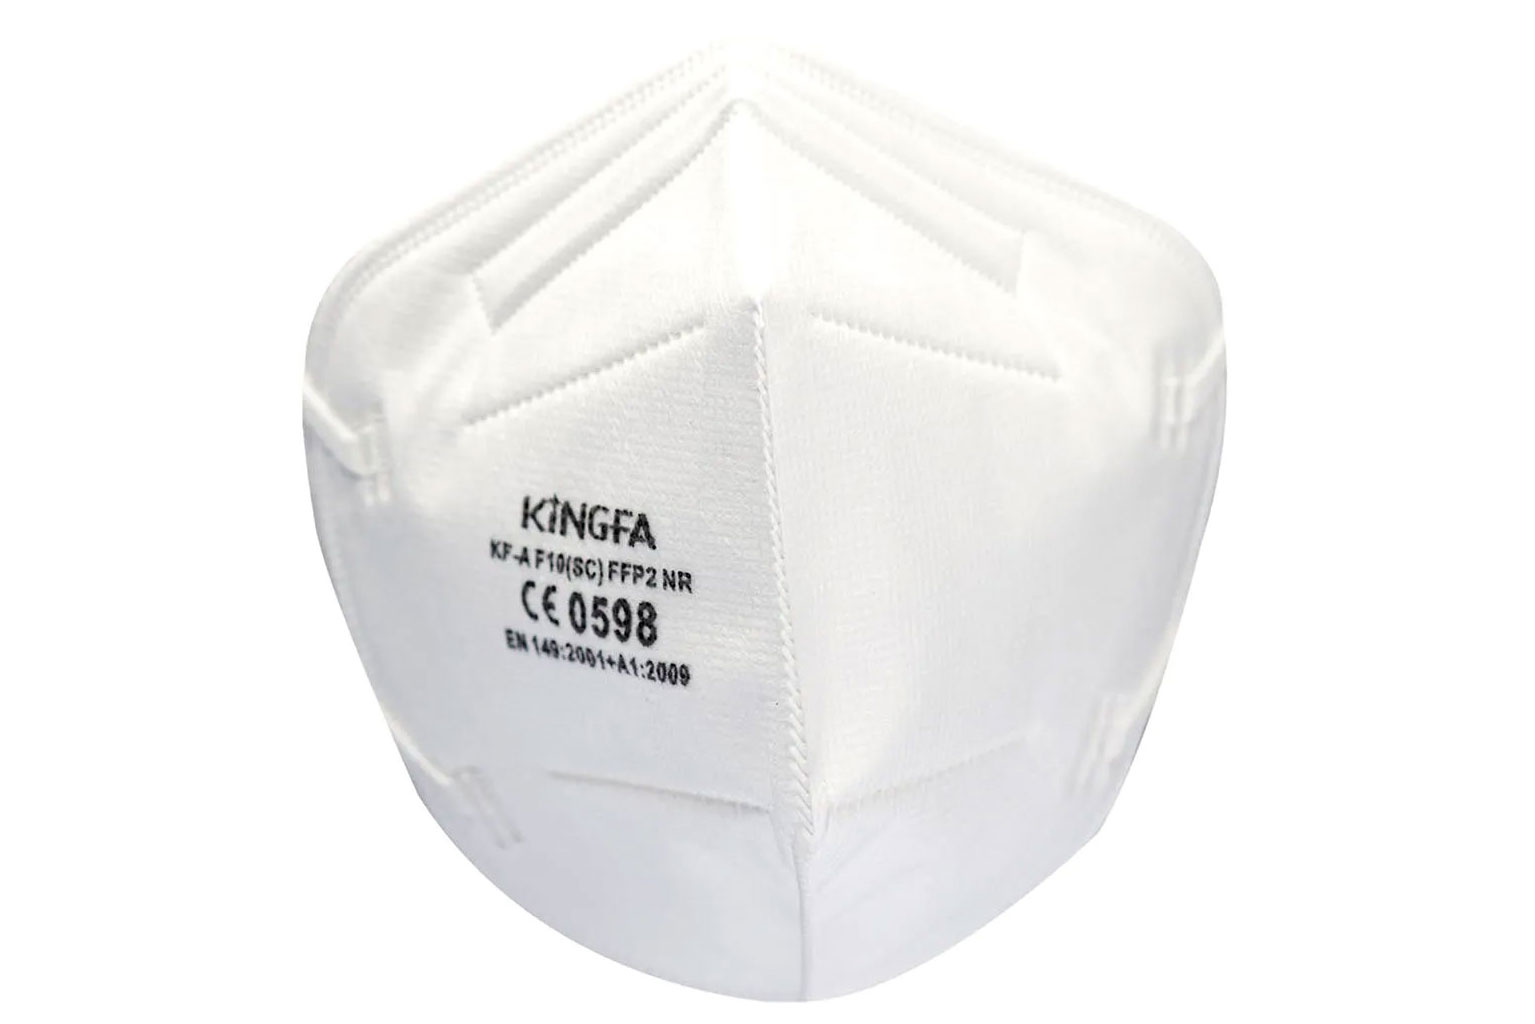 Kingfa FFP2 NR KF-A F10 (SC) mit CE Zertifizierung (VPE 6) 